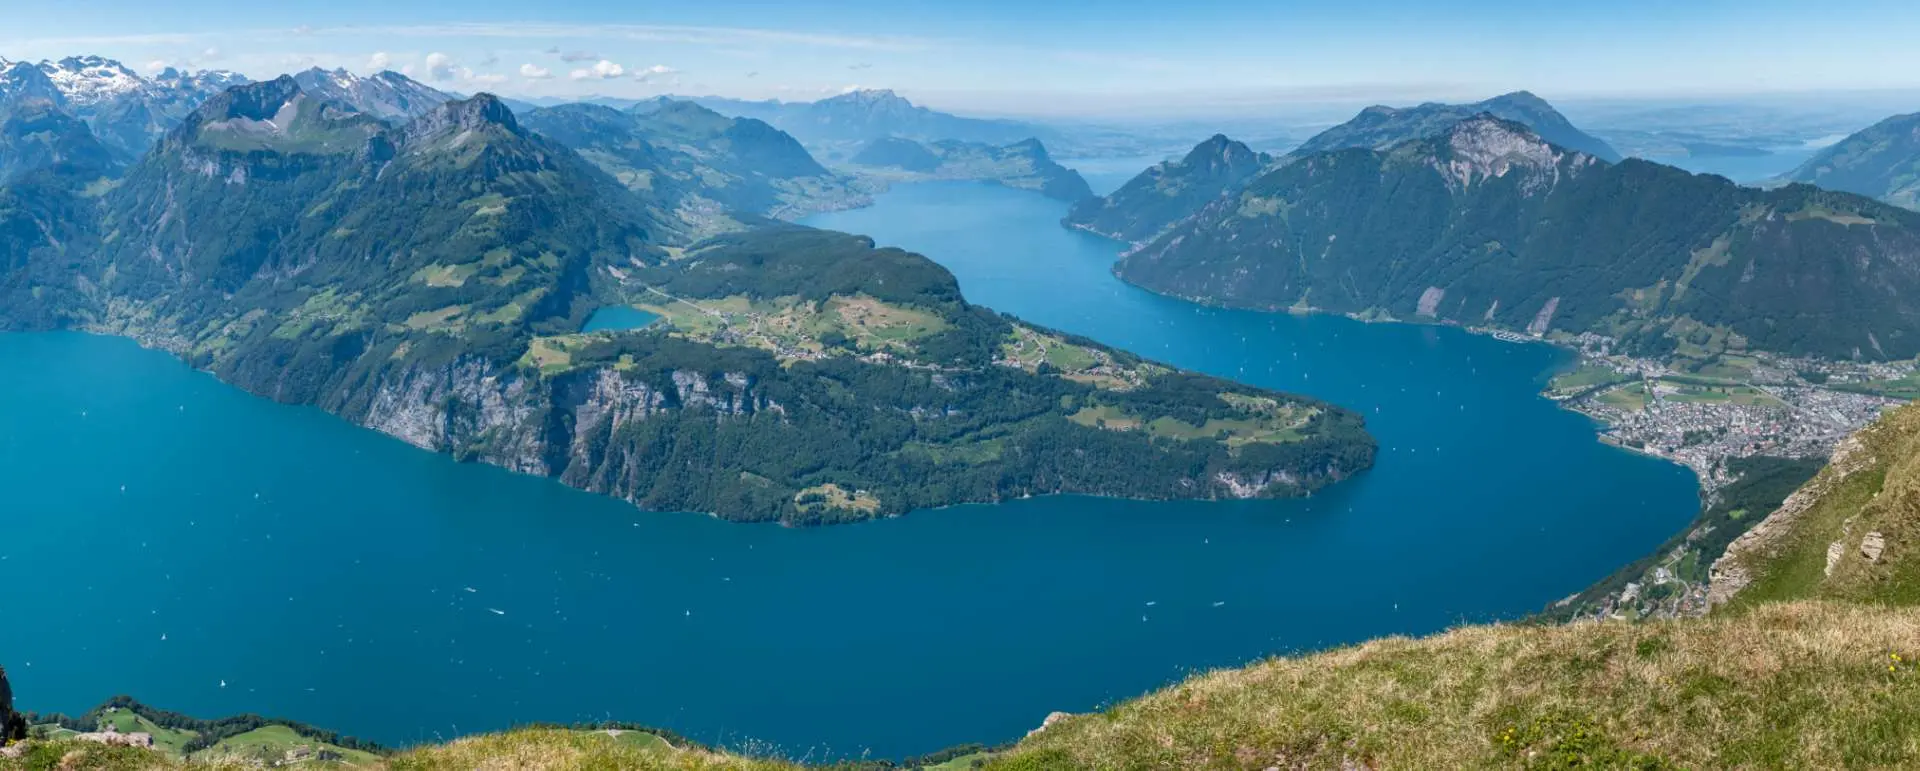 Lake Lucerne - the destination for graduates